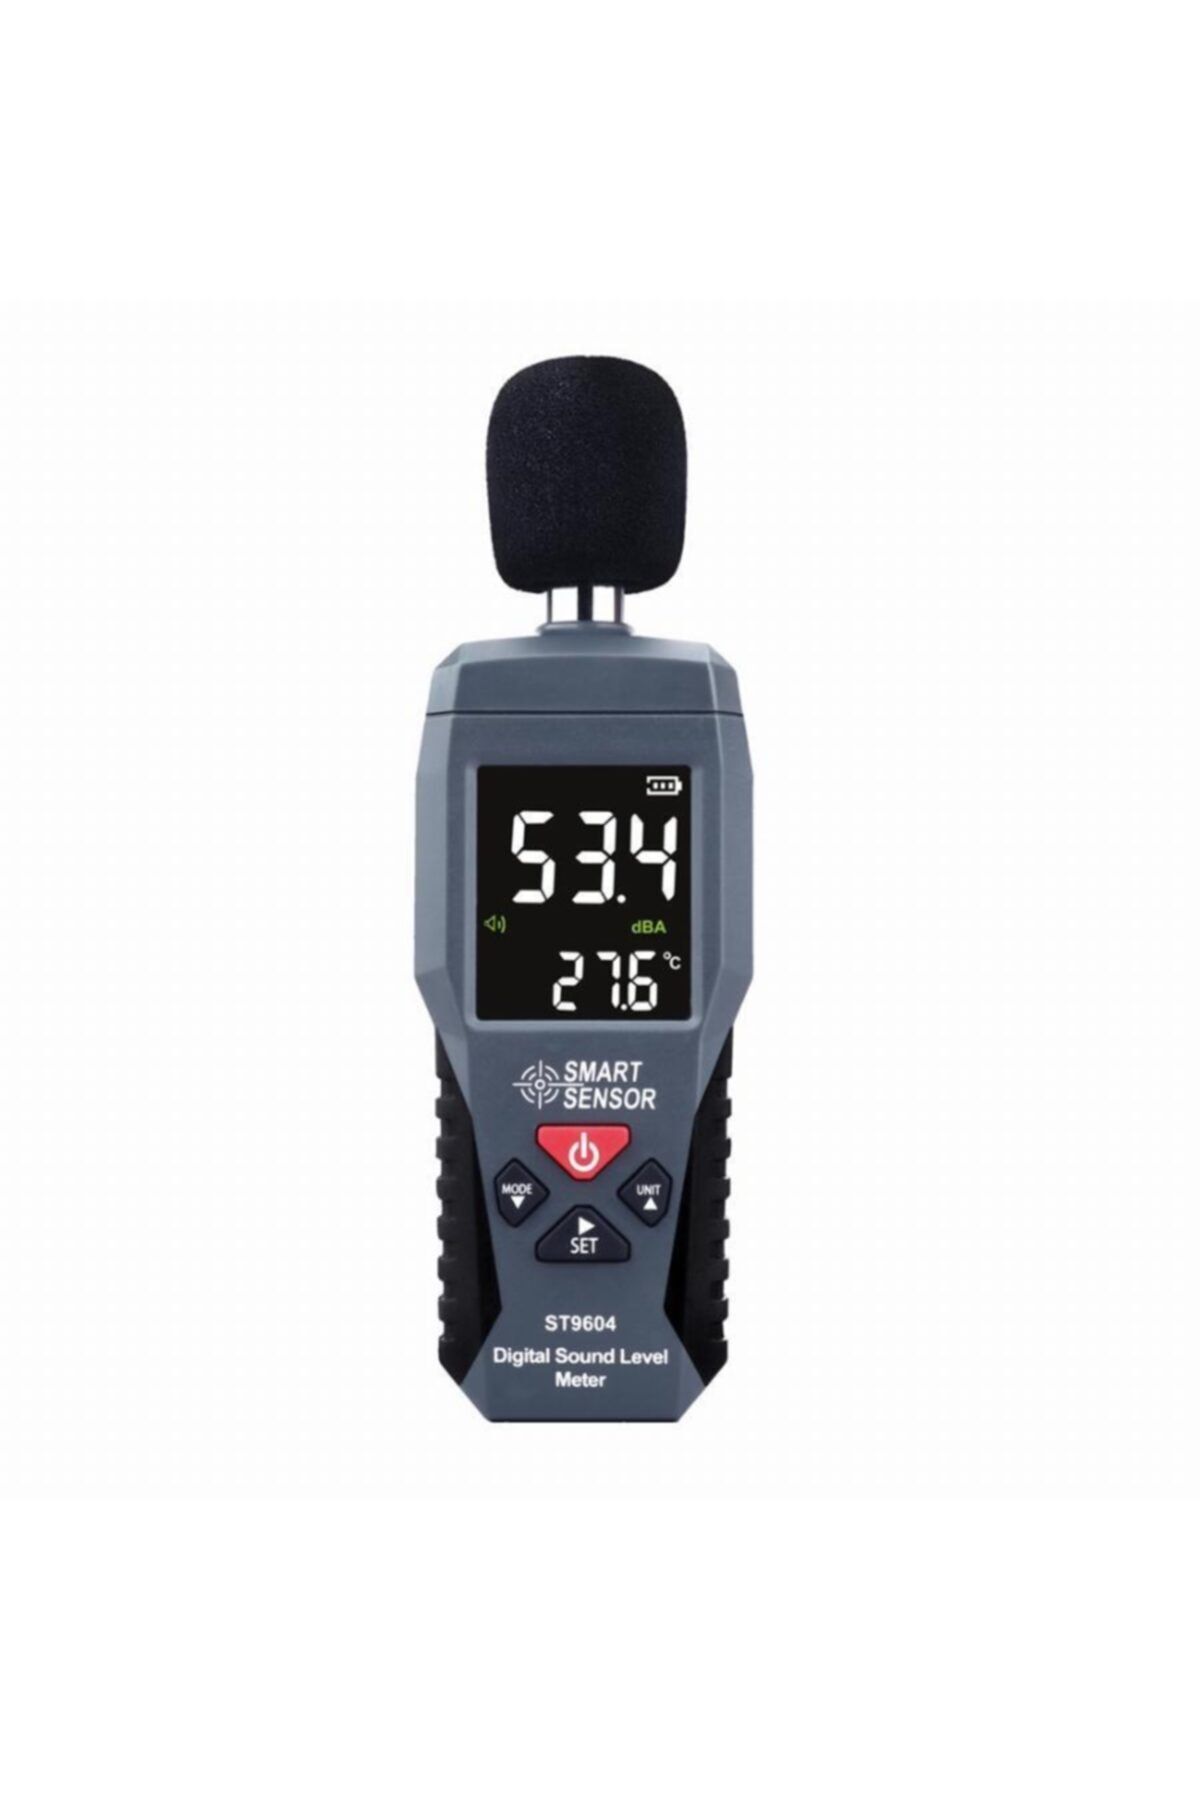 Alfa Smart Sensor St9604 Desibel Ses Seviyesi Gürültü Ölçer Ölçüm 30-130db Db Dedektörü Ses Test Cihazı